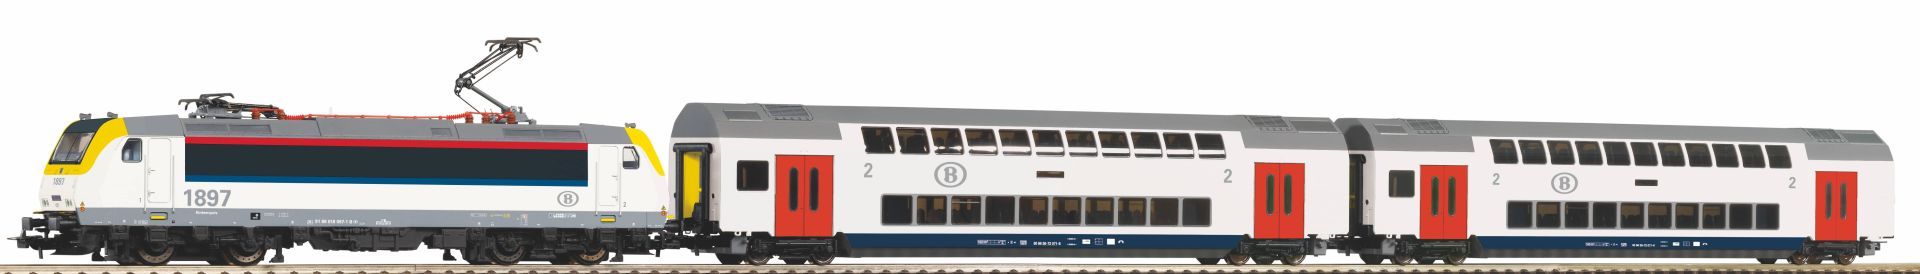 Piko 59108 - Digitales Startset mit PSCwlan, Personenzug, SNCB, Ep.VI